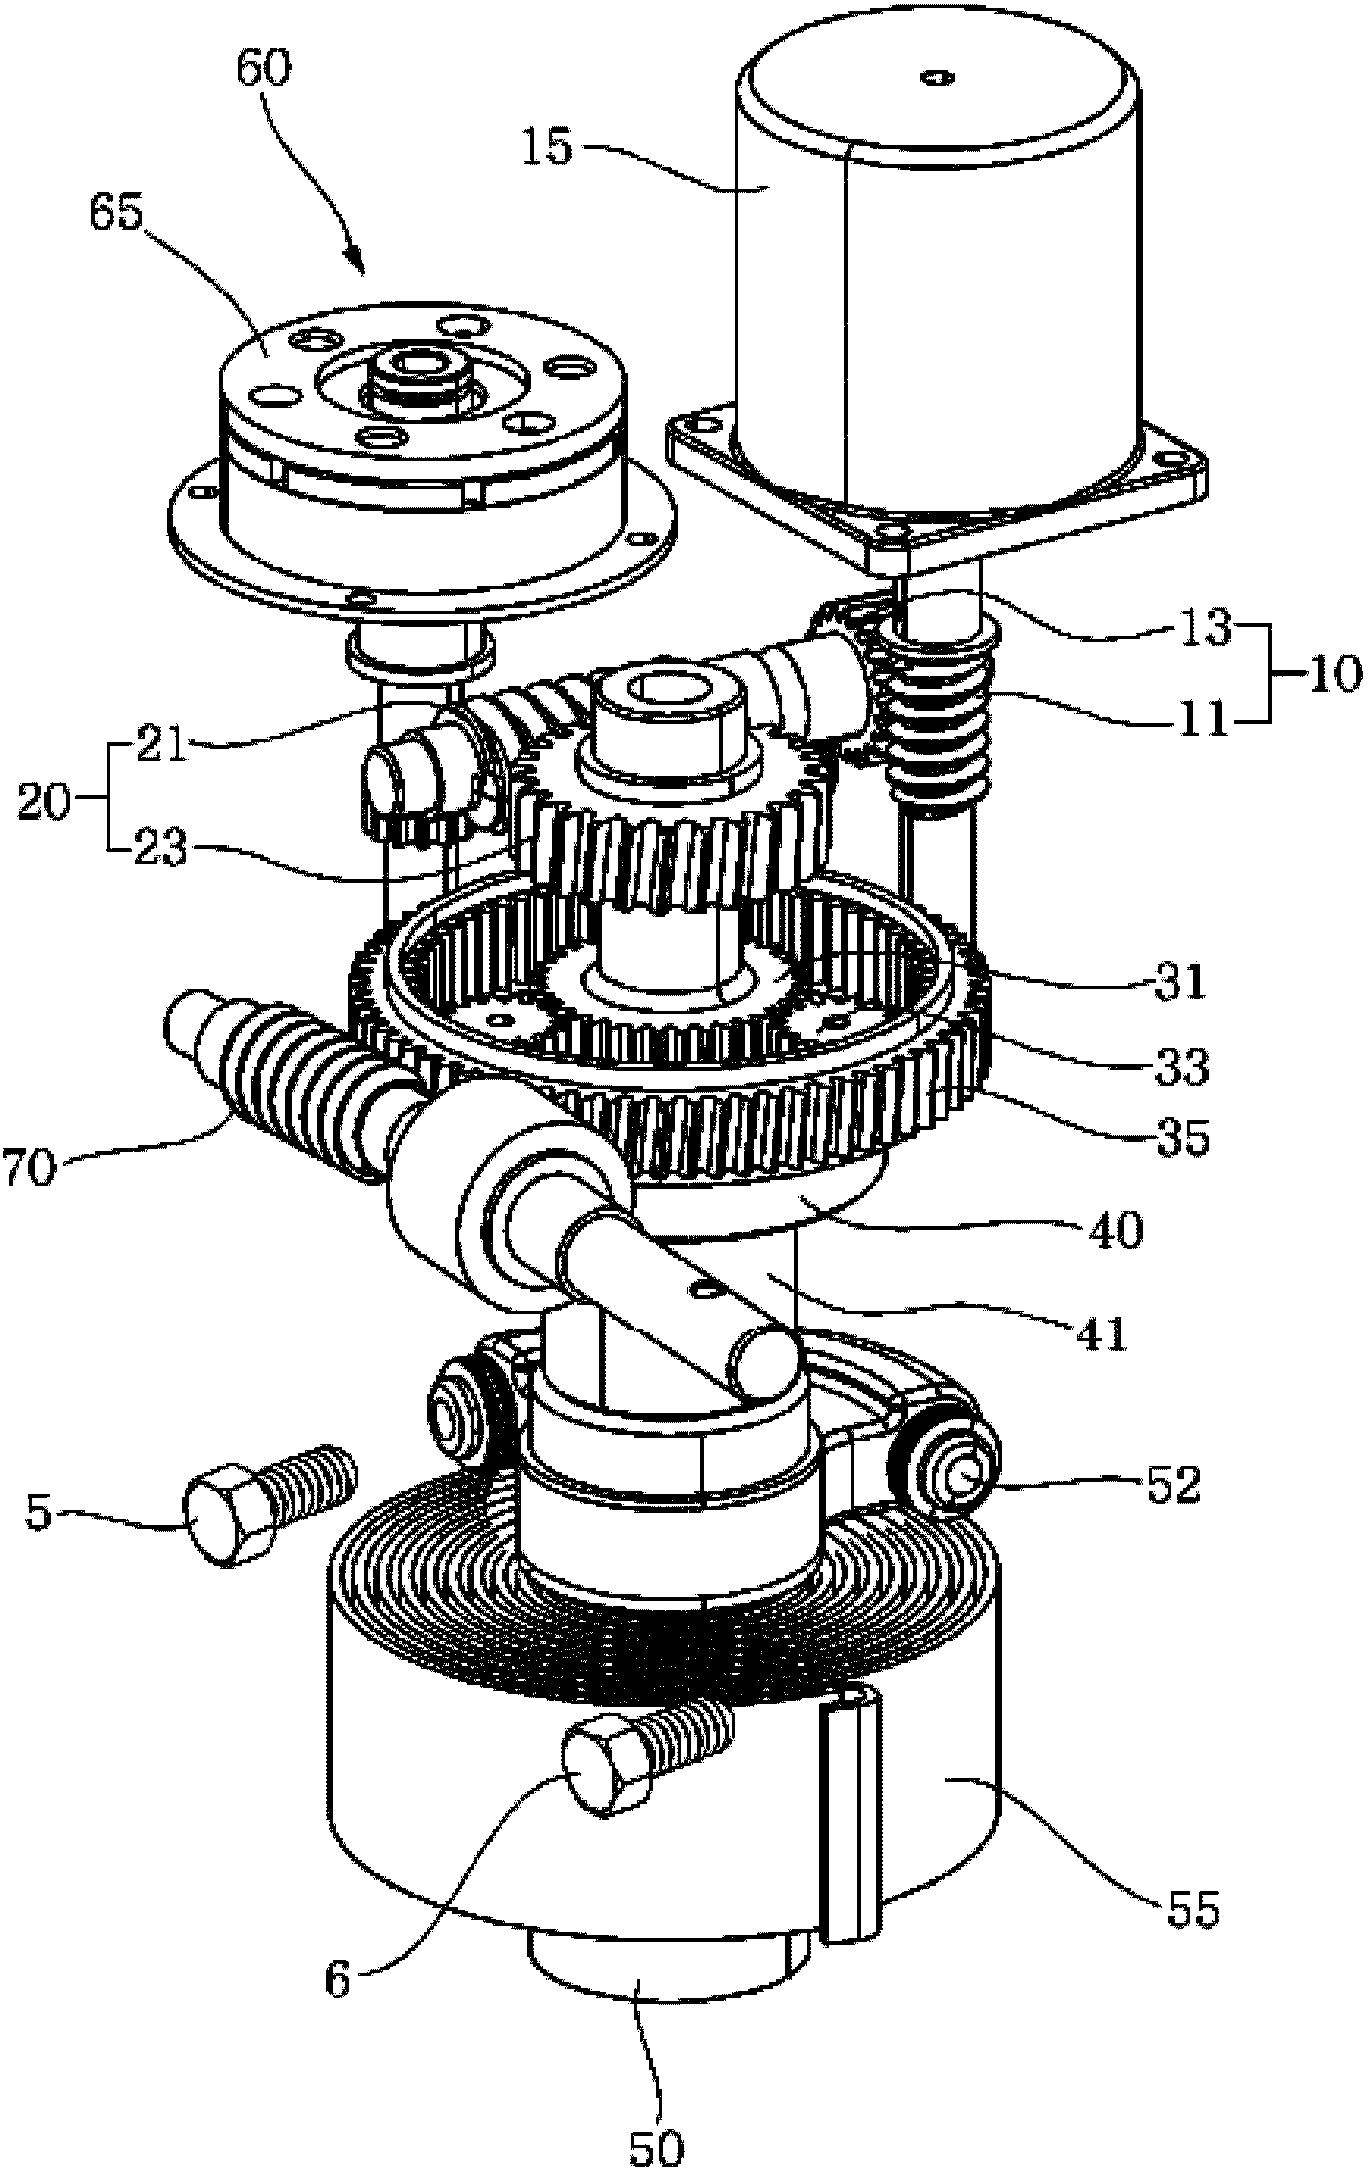 Spring-return valve actuator using planetary gear train